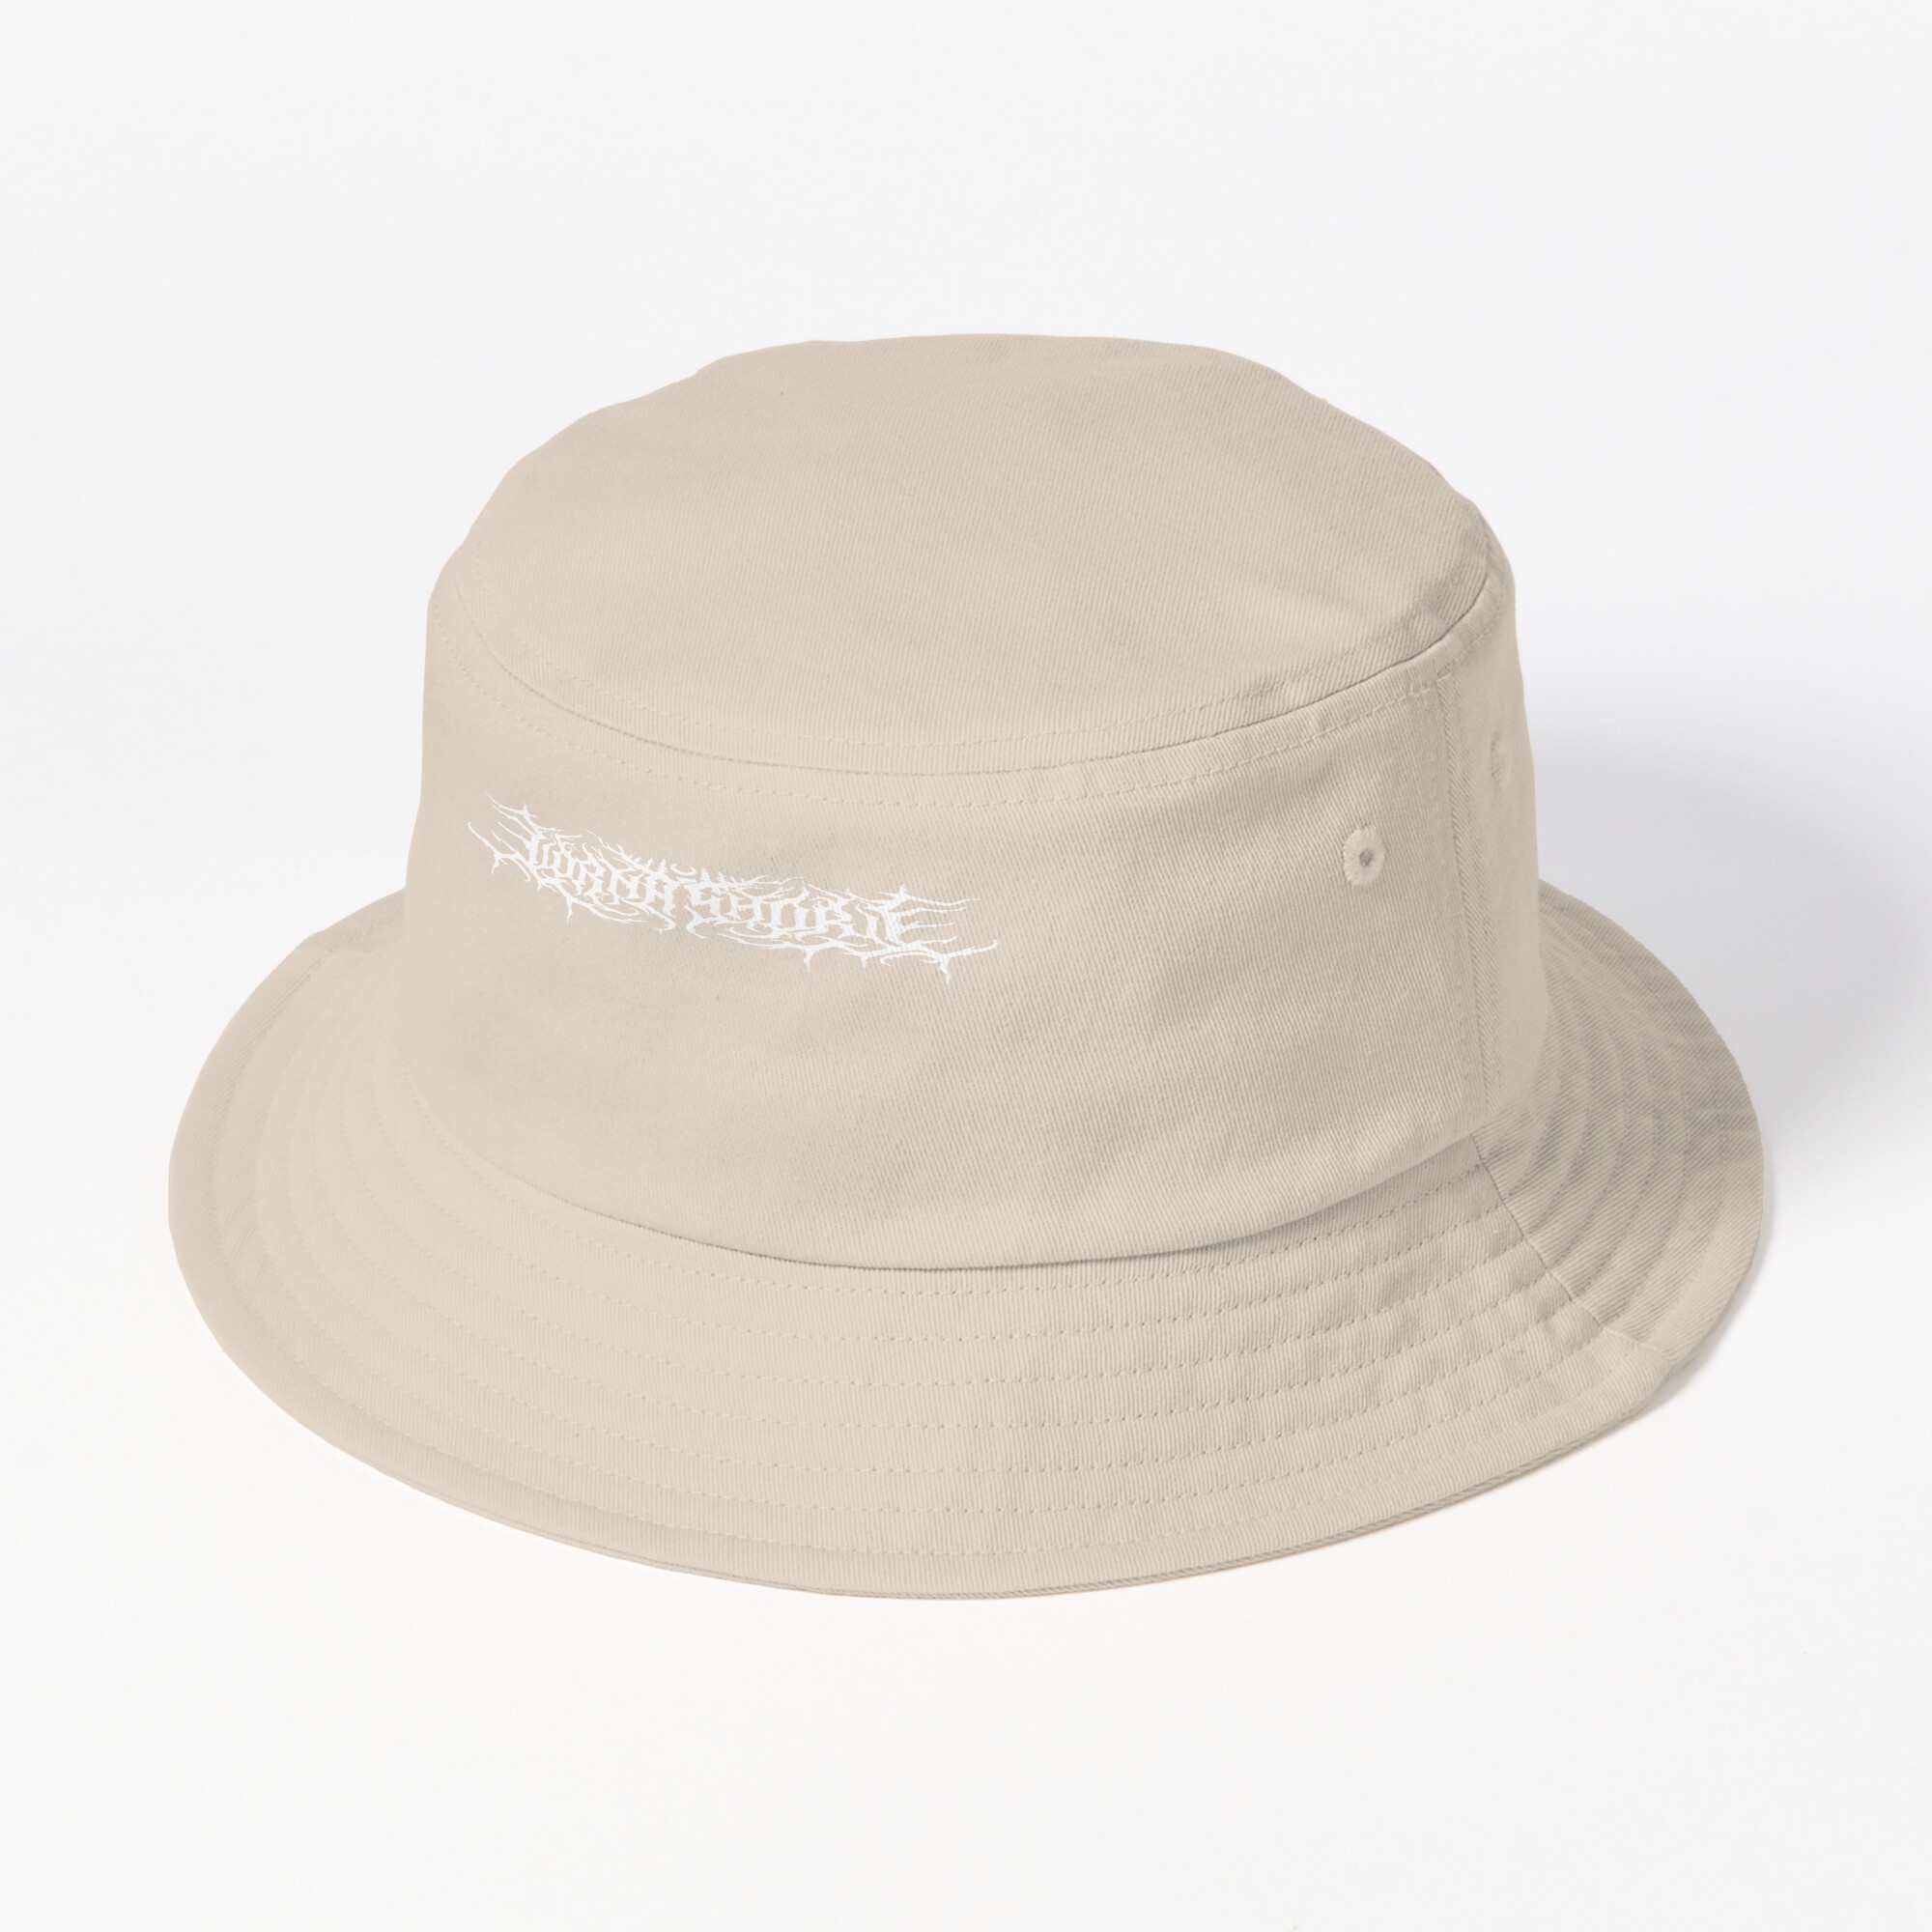 ssrcobucket hatproducte5d6c5f62bbf65eeprimarysquare2000x2000 bgf8f8f8 - Lorna Shore Shop